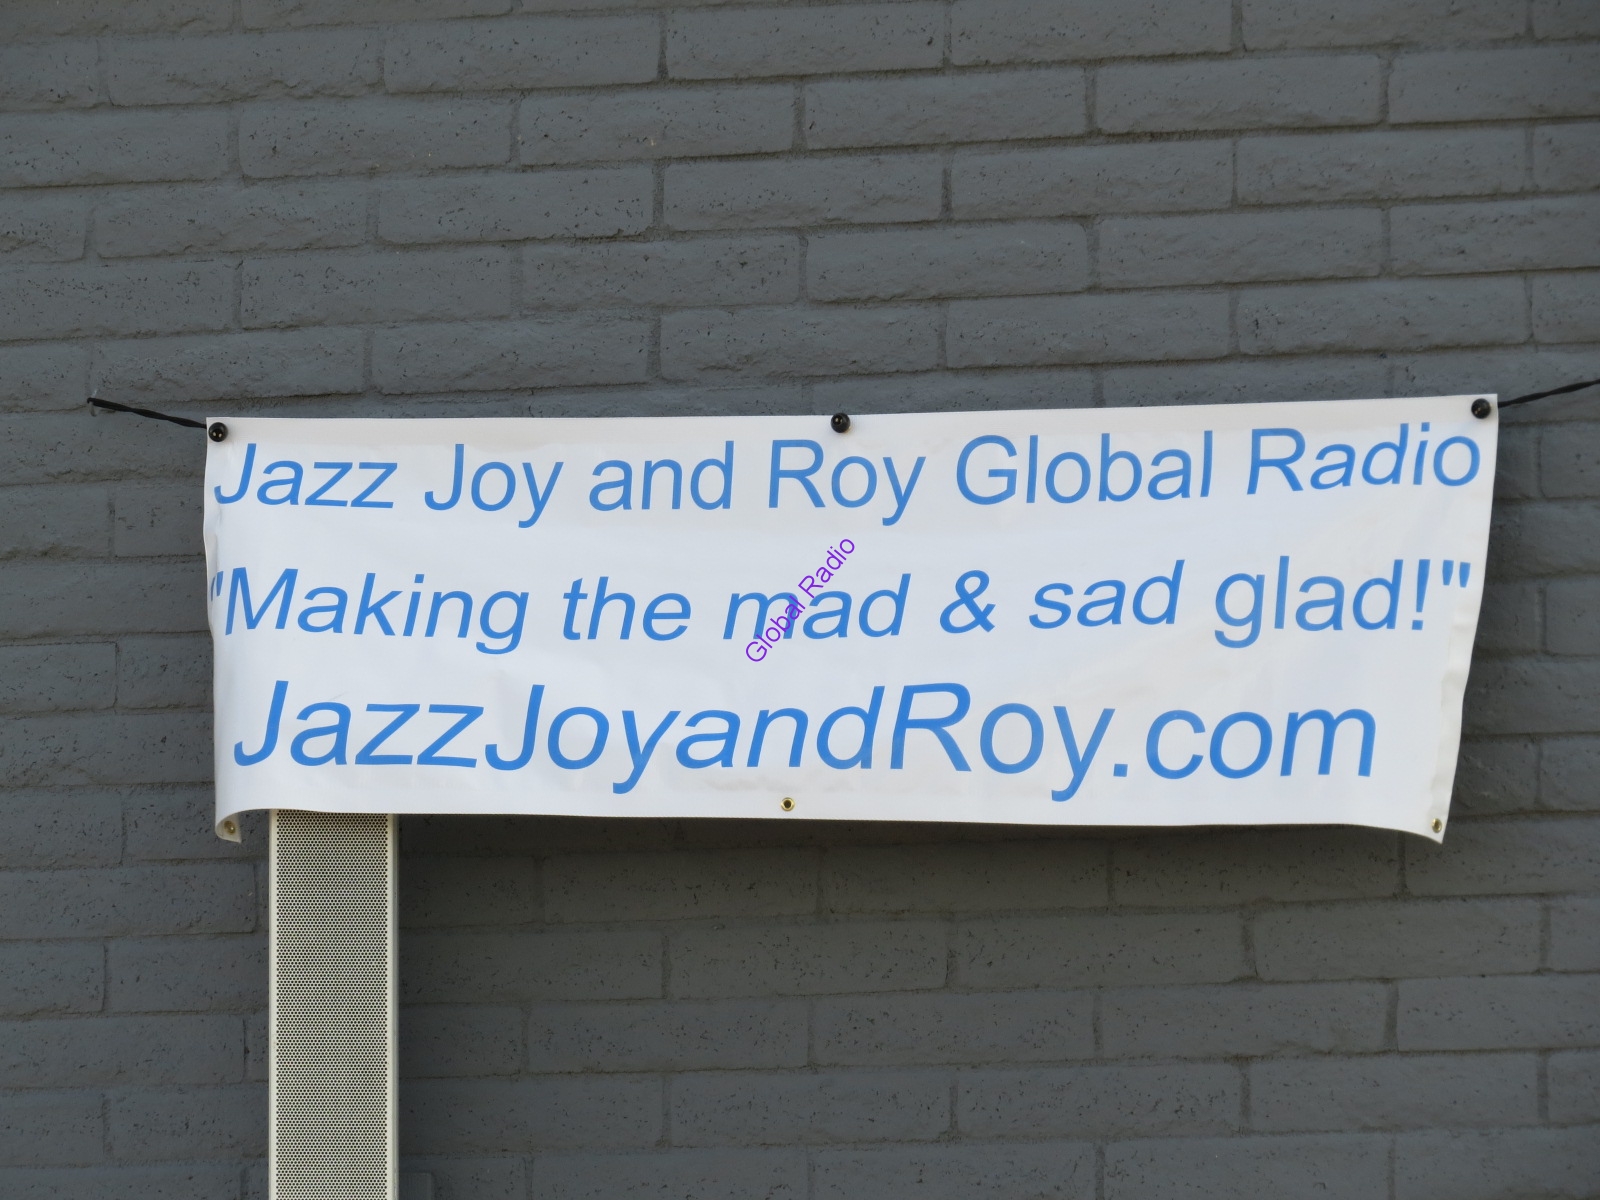 Jazz Joy and Roy Global Radio, "Making the mad and sad glad!"